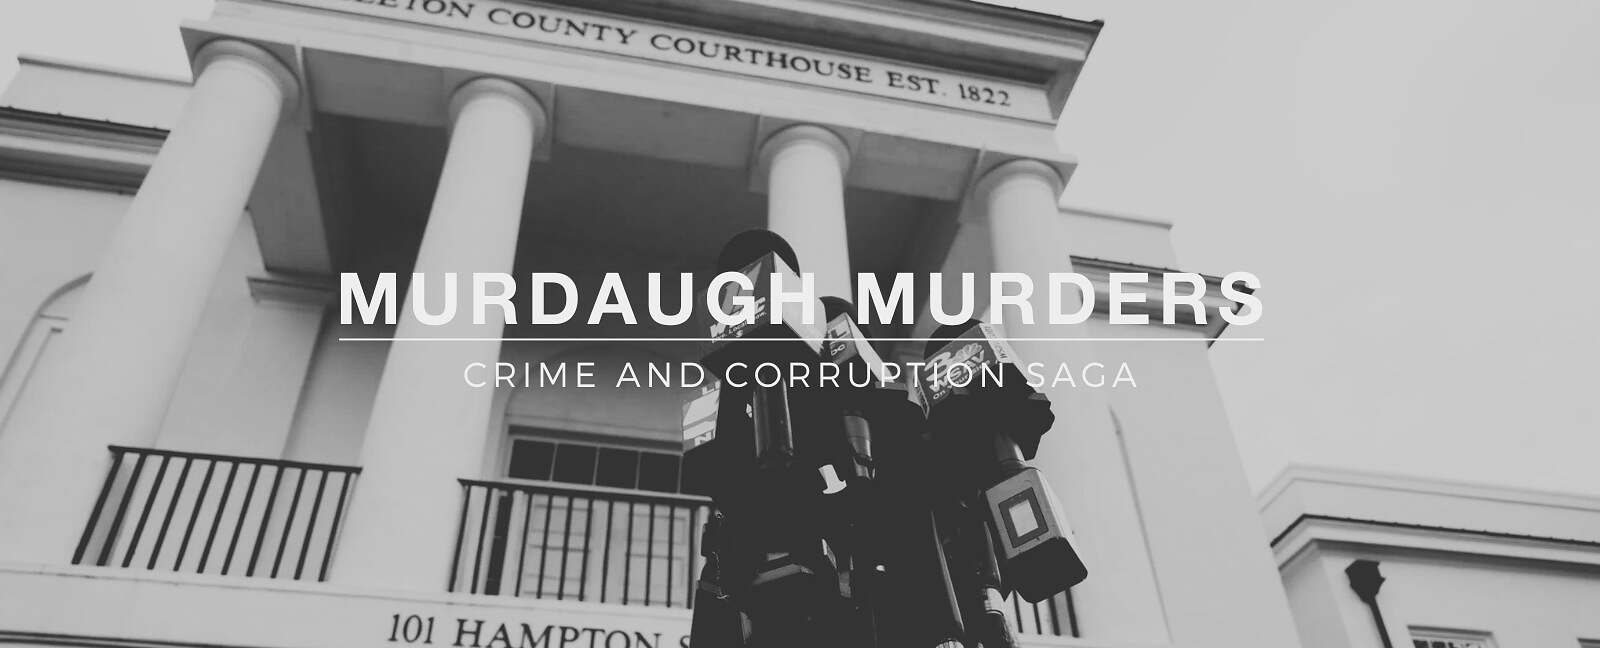 Alex Murdaugh Murder Trial Colleton County Courthouse exterior